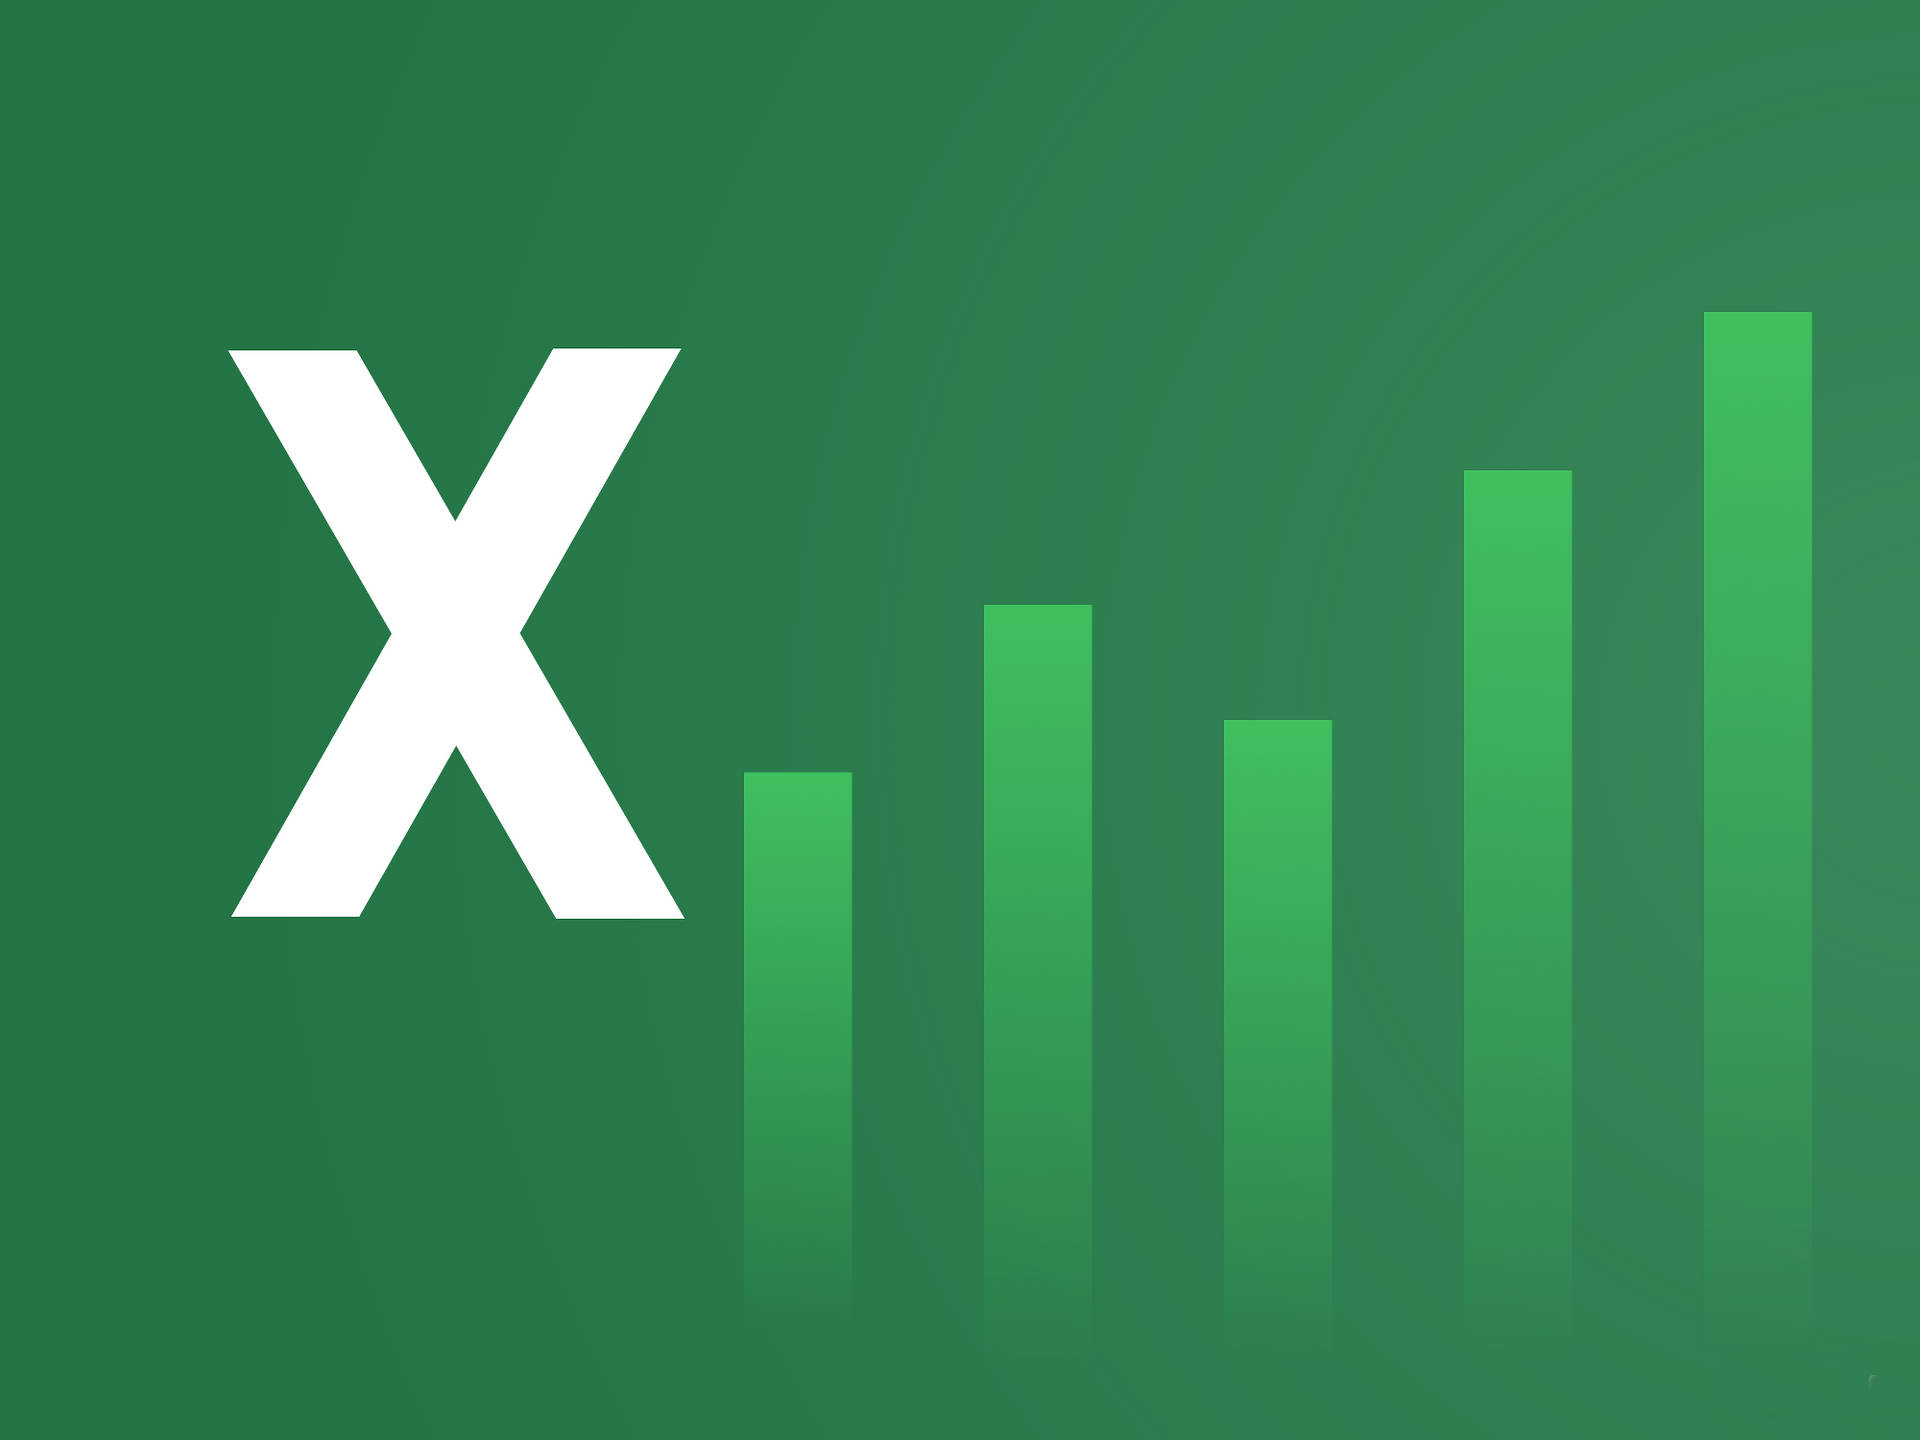 Excel X Monogram Logo Wallpaper